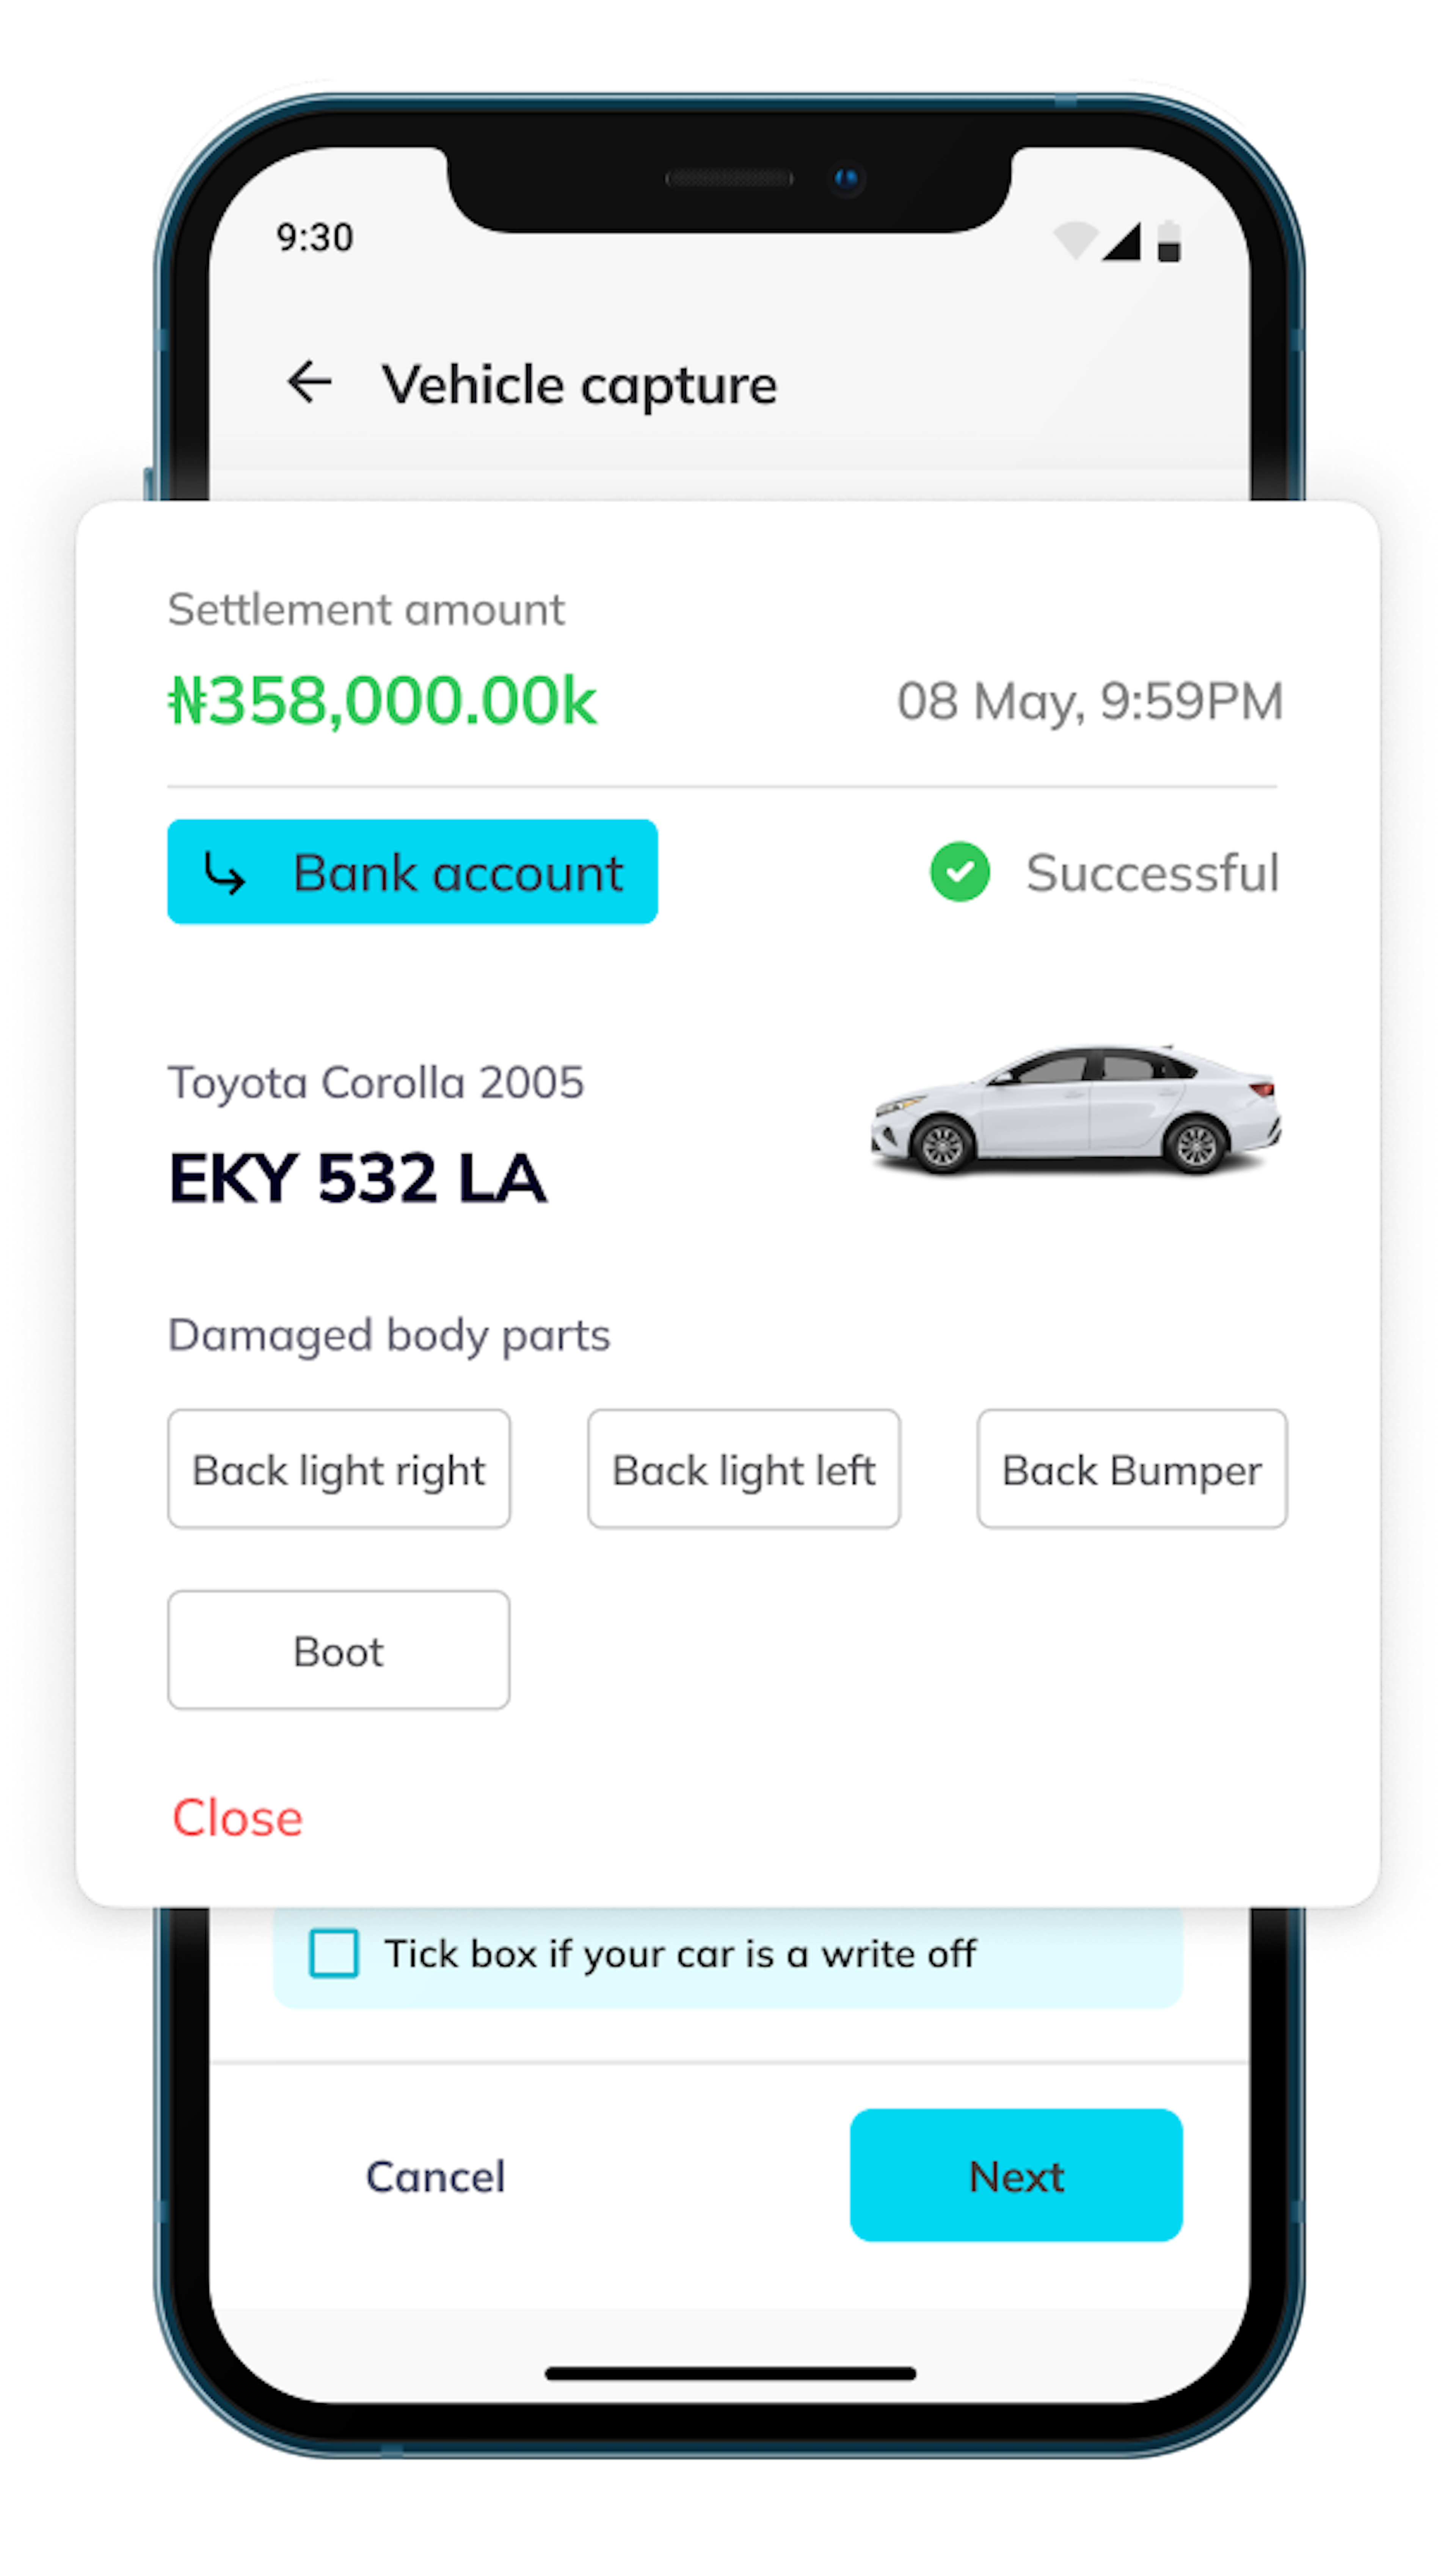 Fastest car insurance claim in Nigeria - 3 mins